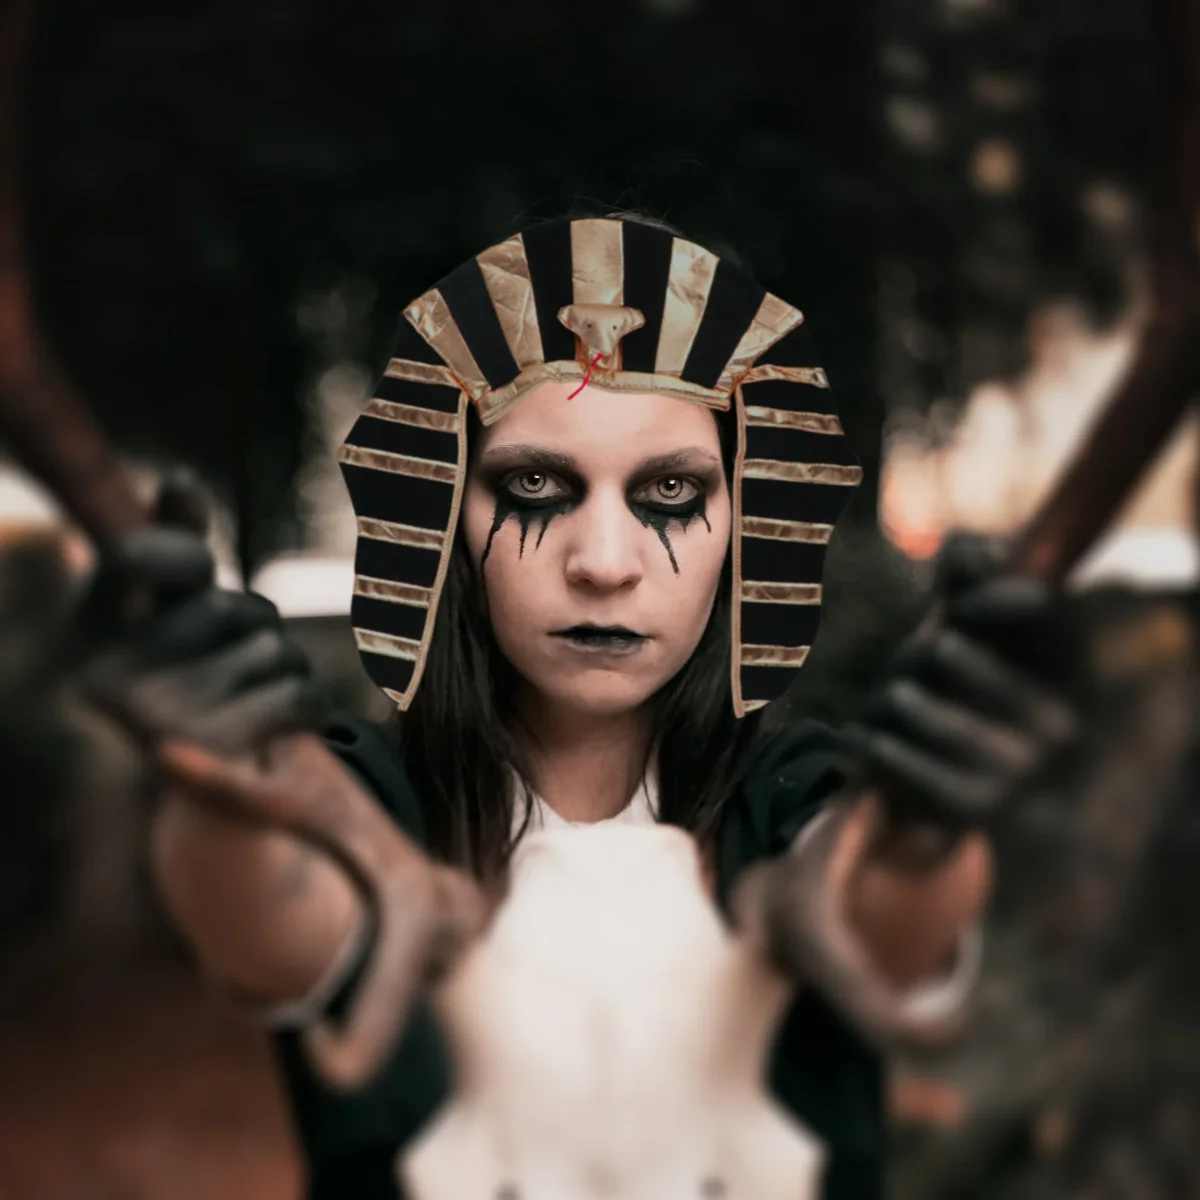 

Pharaoh Egyptian Hatking Cosplaycaps Headpiece Dress Partycostume Headdress Masquerade Egypt Favors